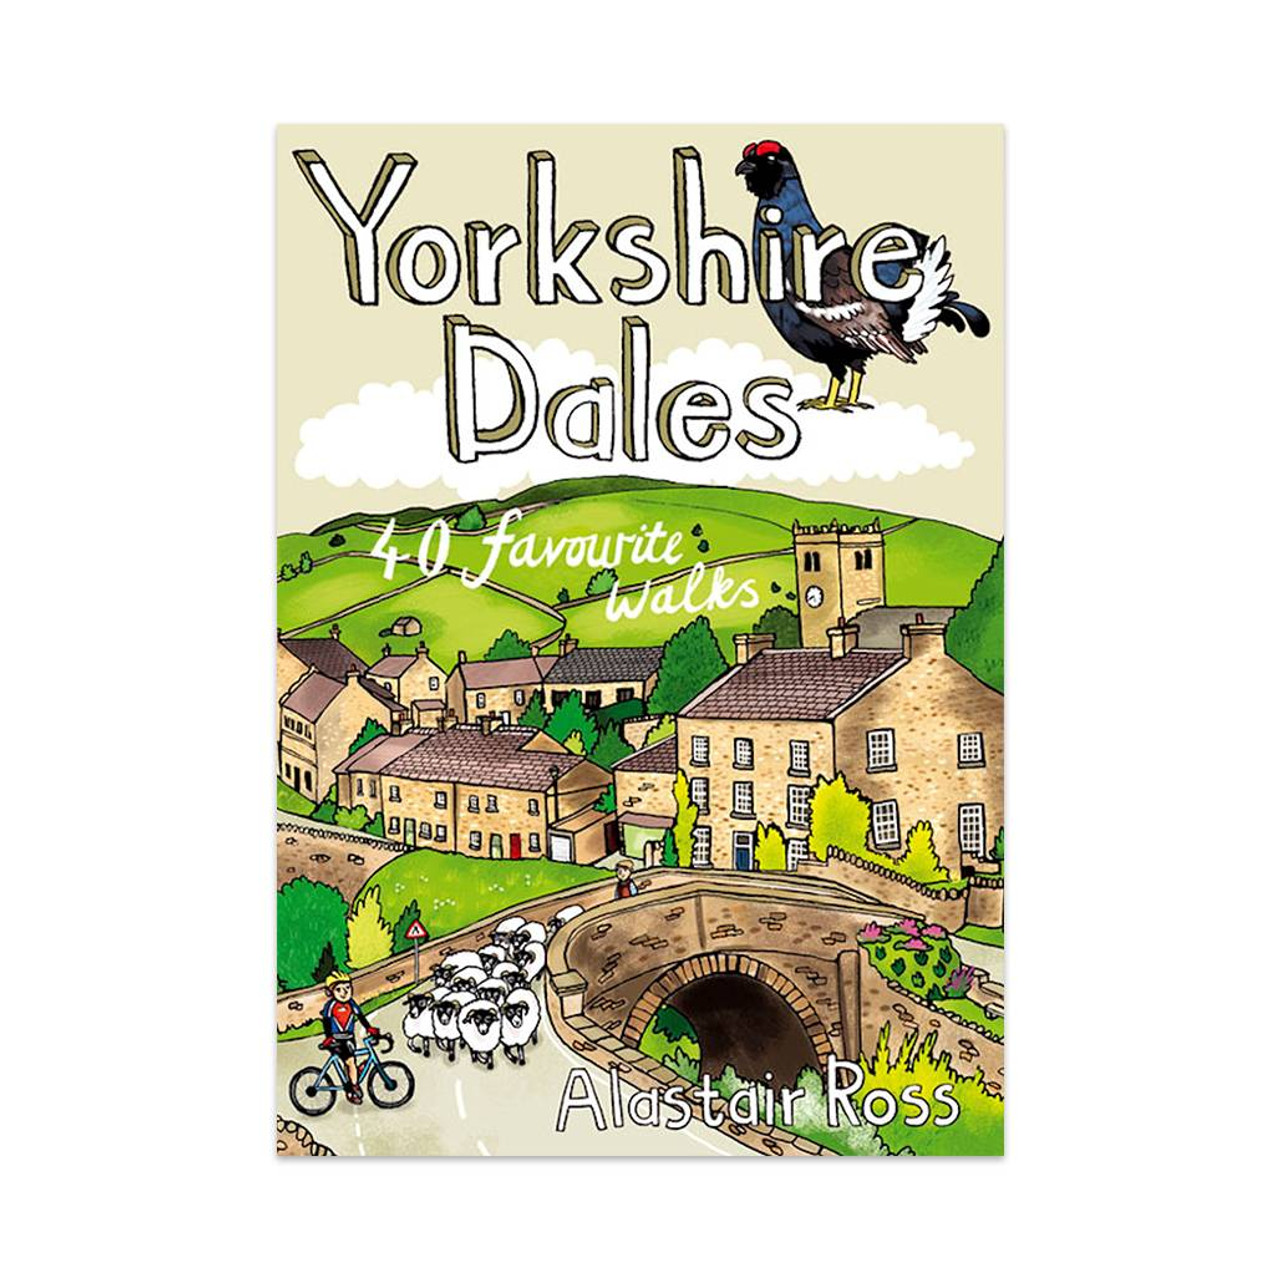 Yorkshire Dales: 40 Favourite Walks